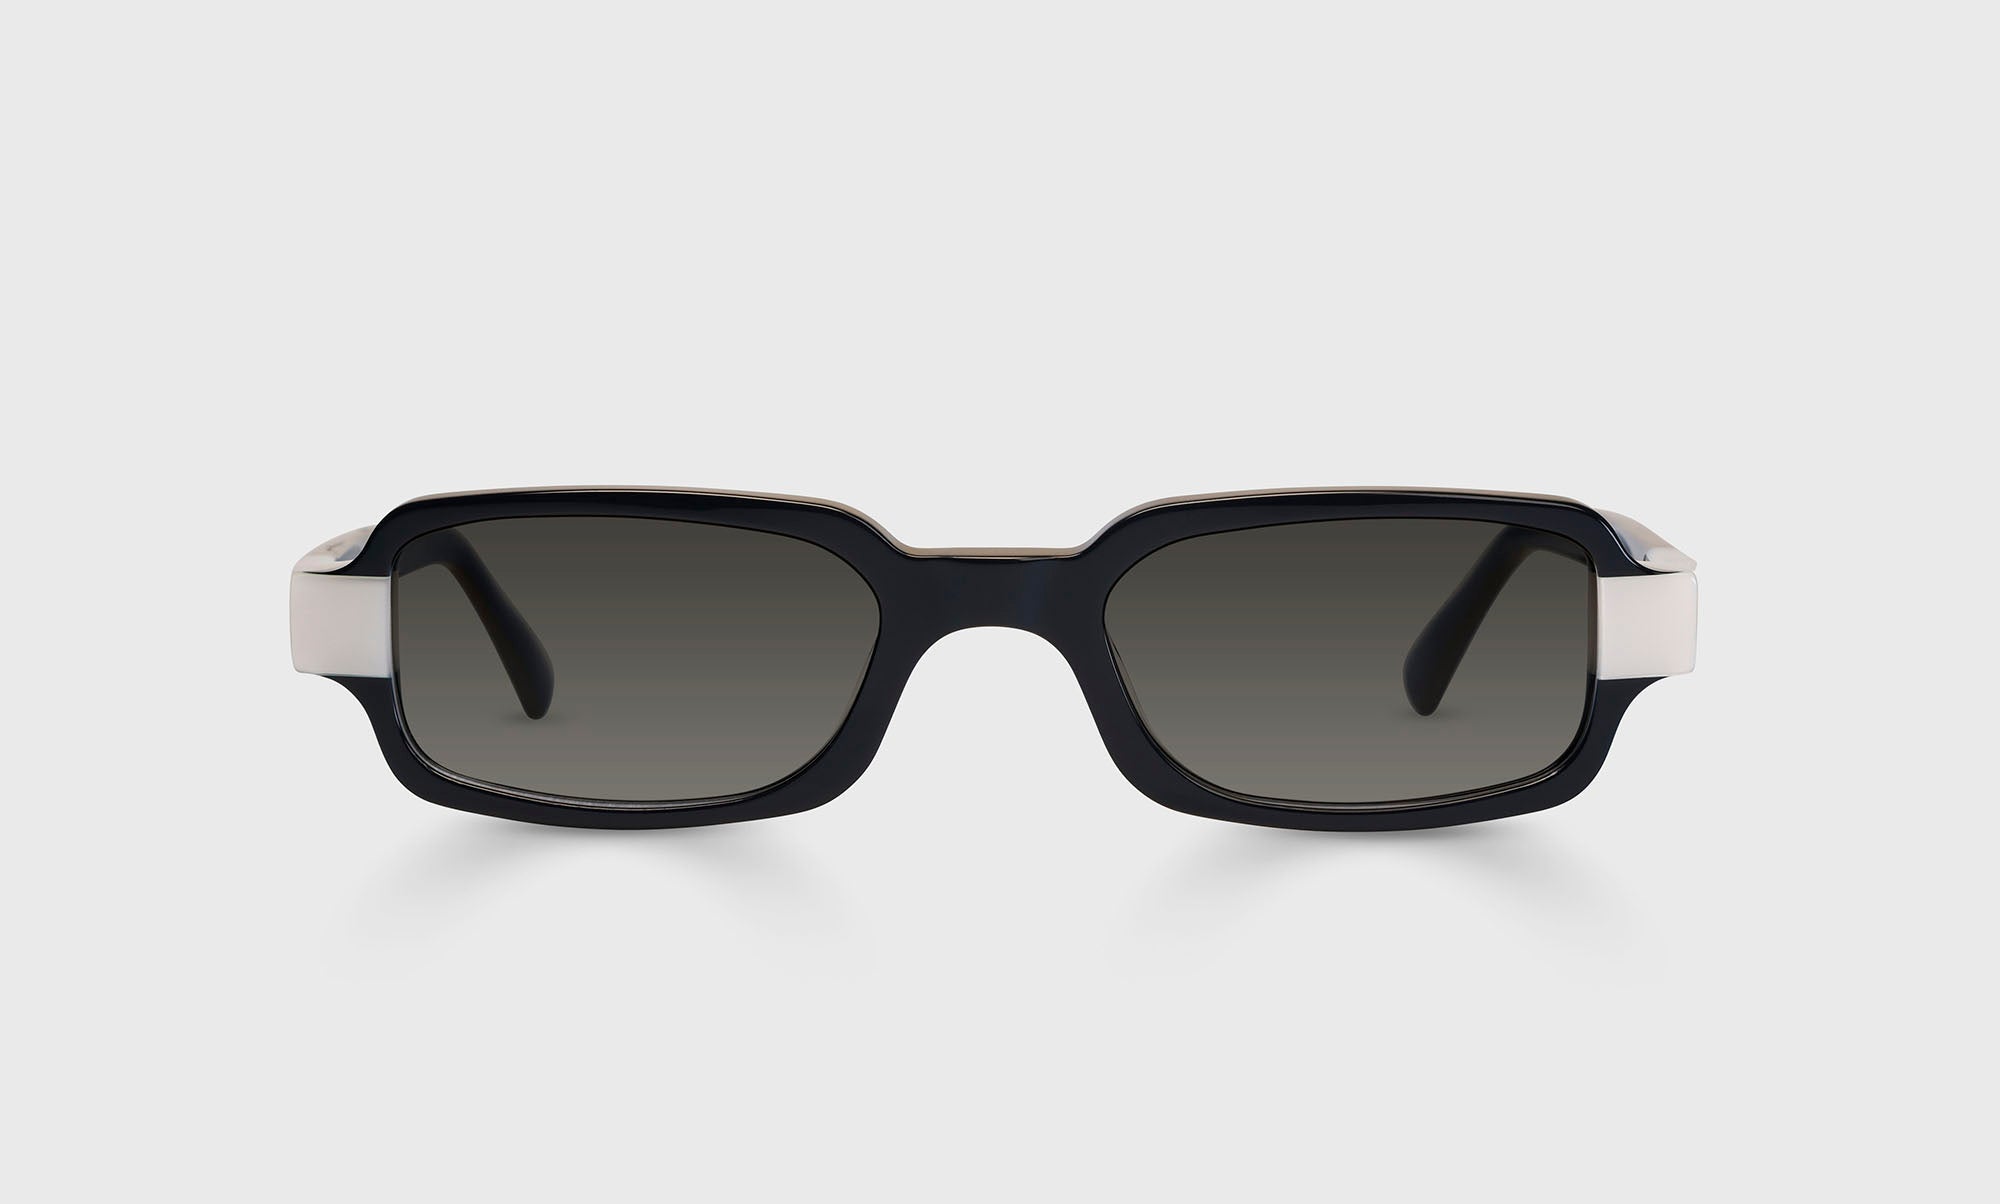 00-pg | eyebobs Straight-Edge, Average, Rectangle, Reader Sunglasses, Polarized Grey